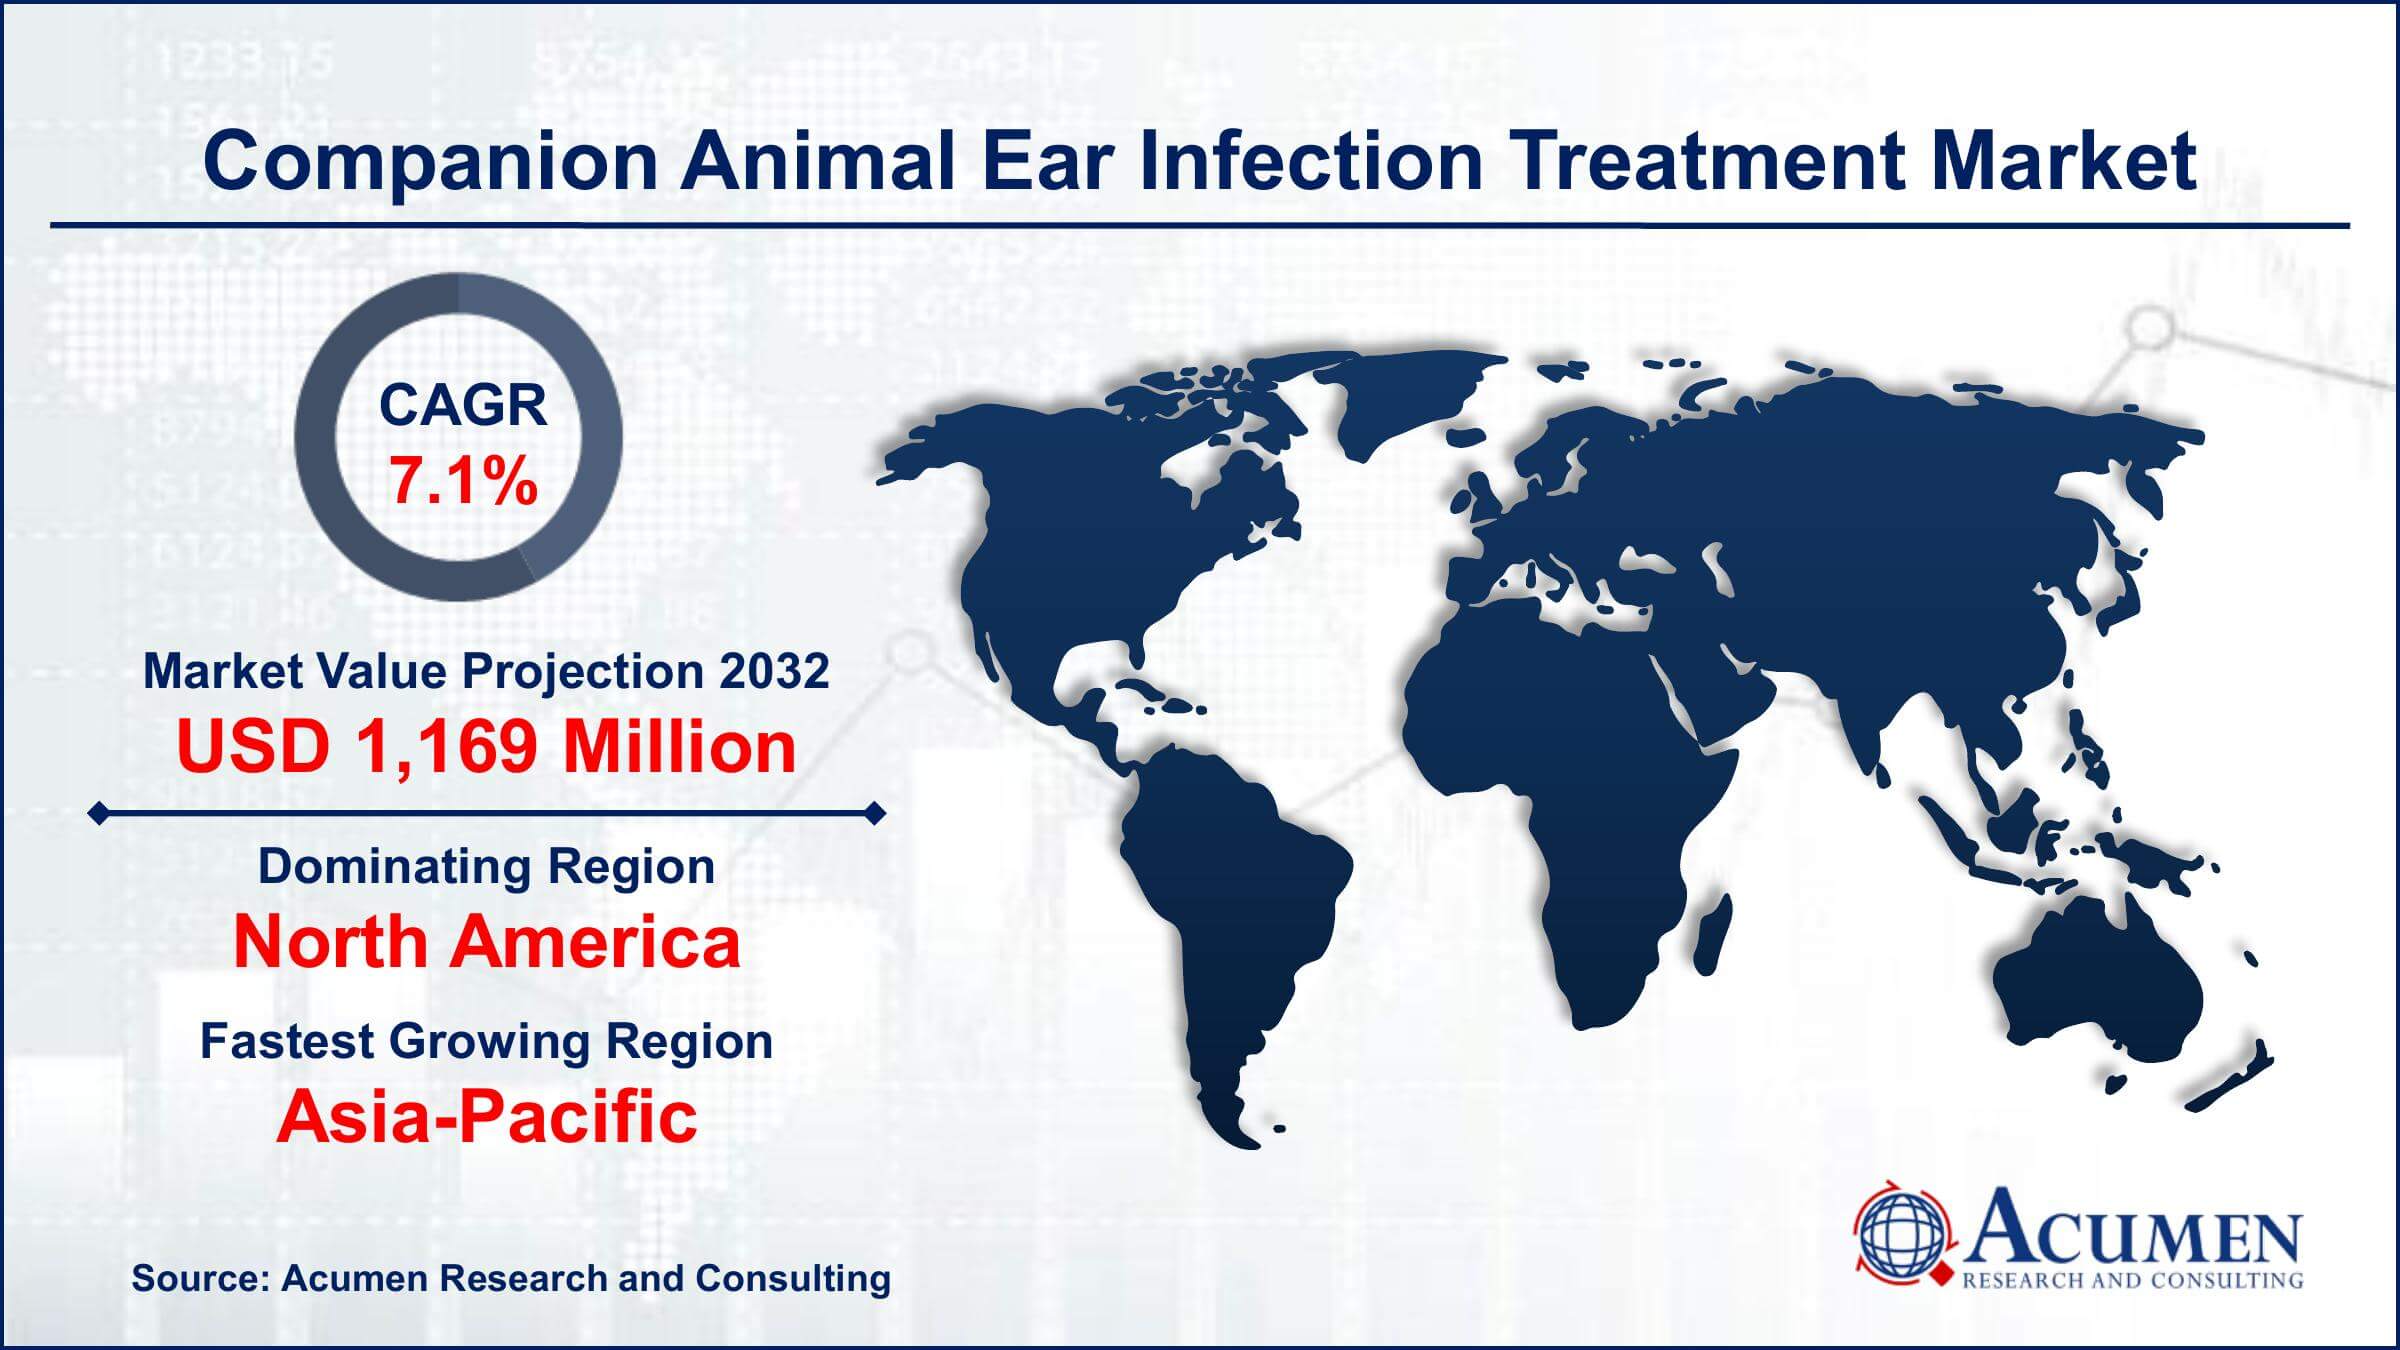 Companion Animal Ear Infection Treatment Market Trends